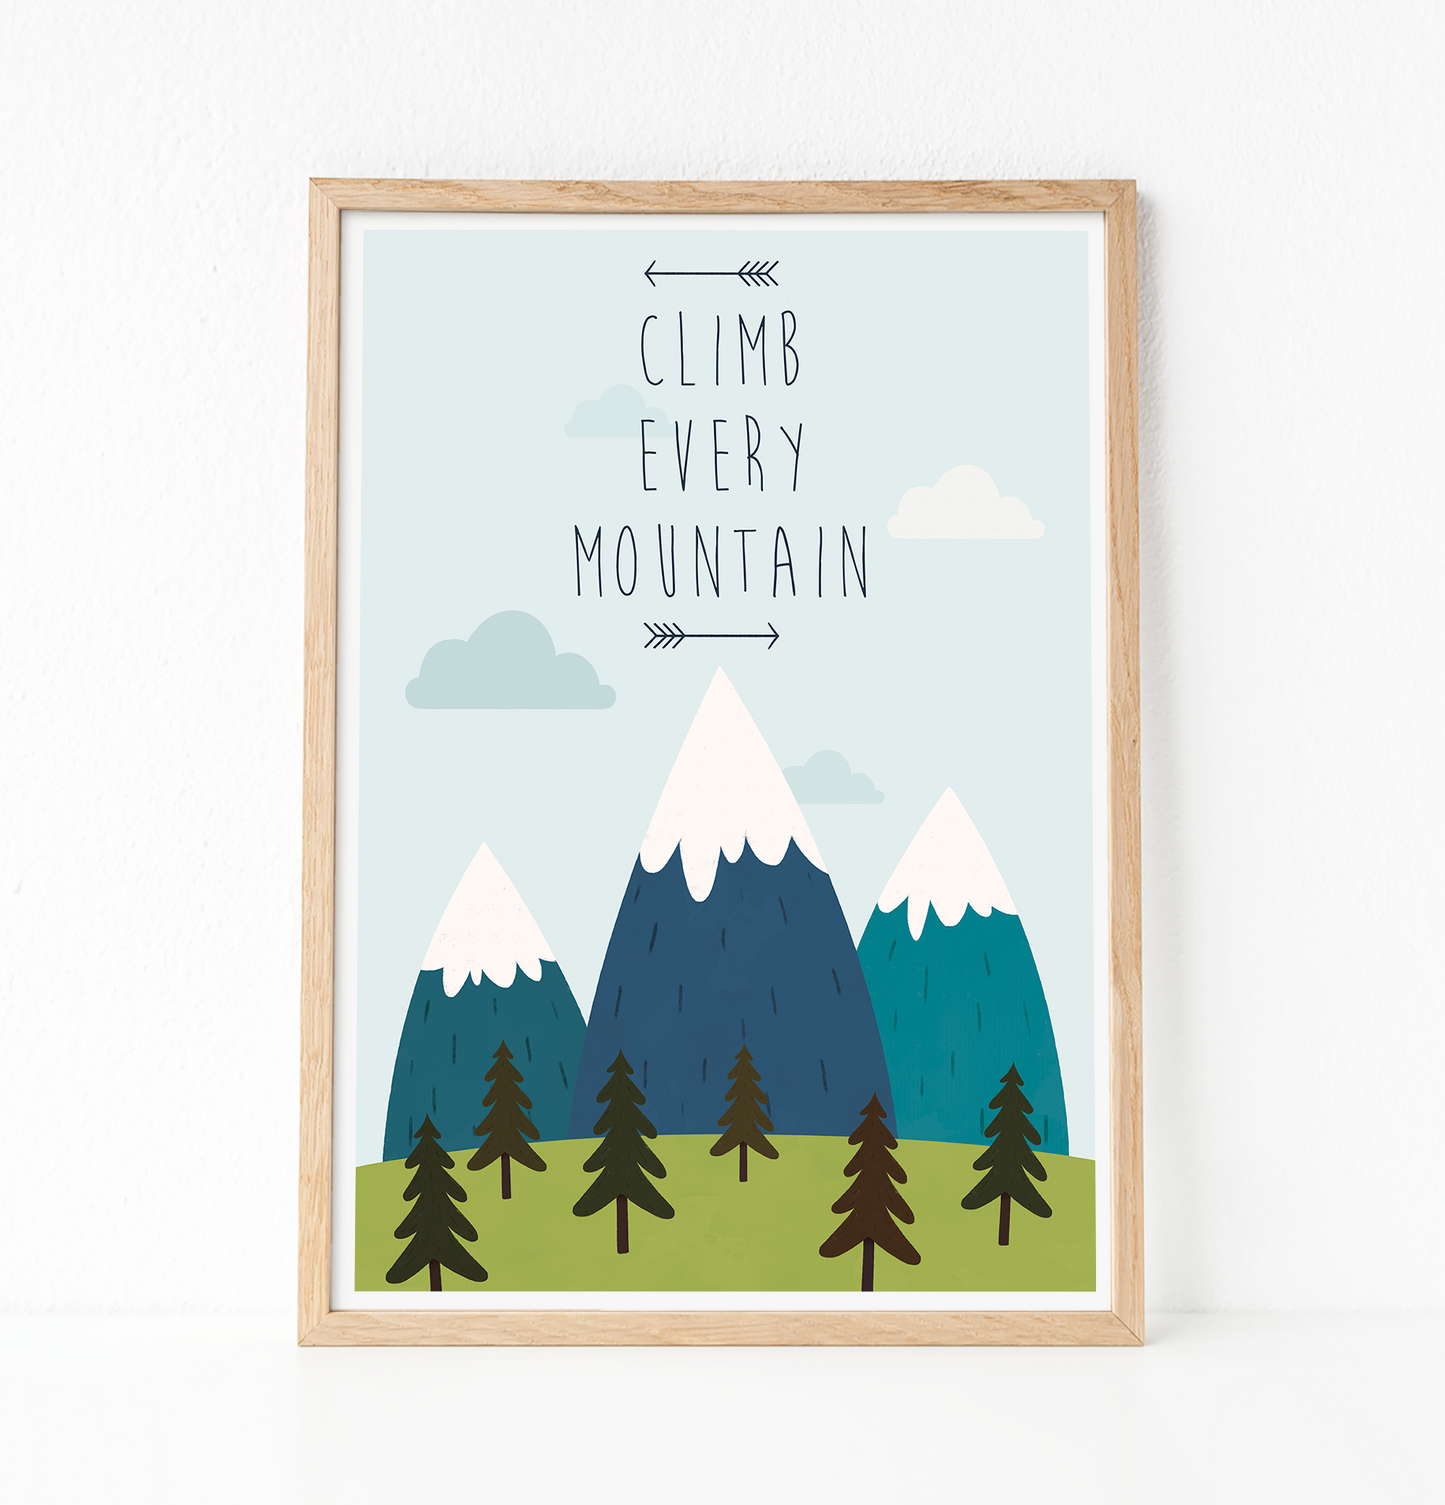 Climb every mountain quote print